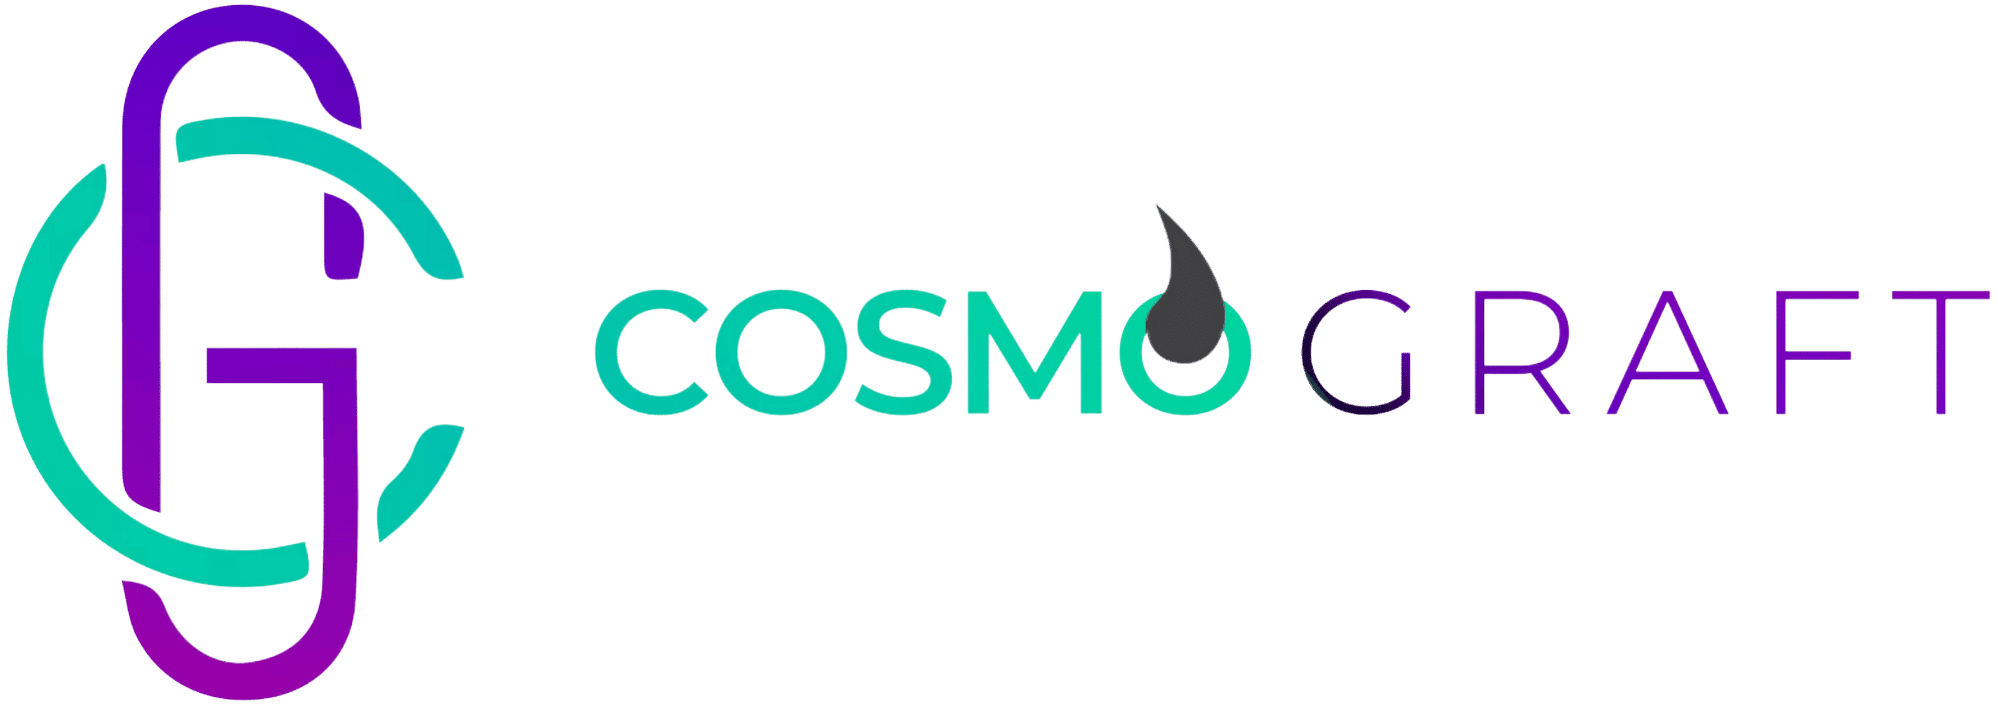 Cosmo Graft Logo